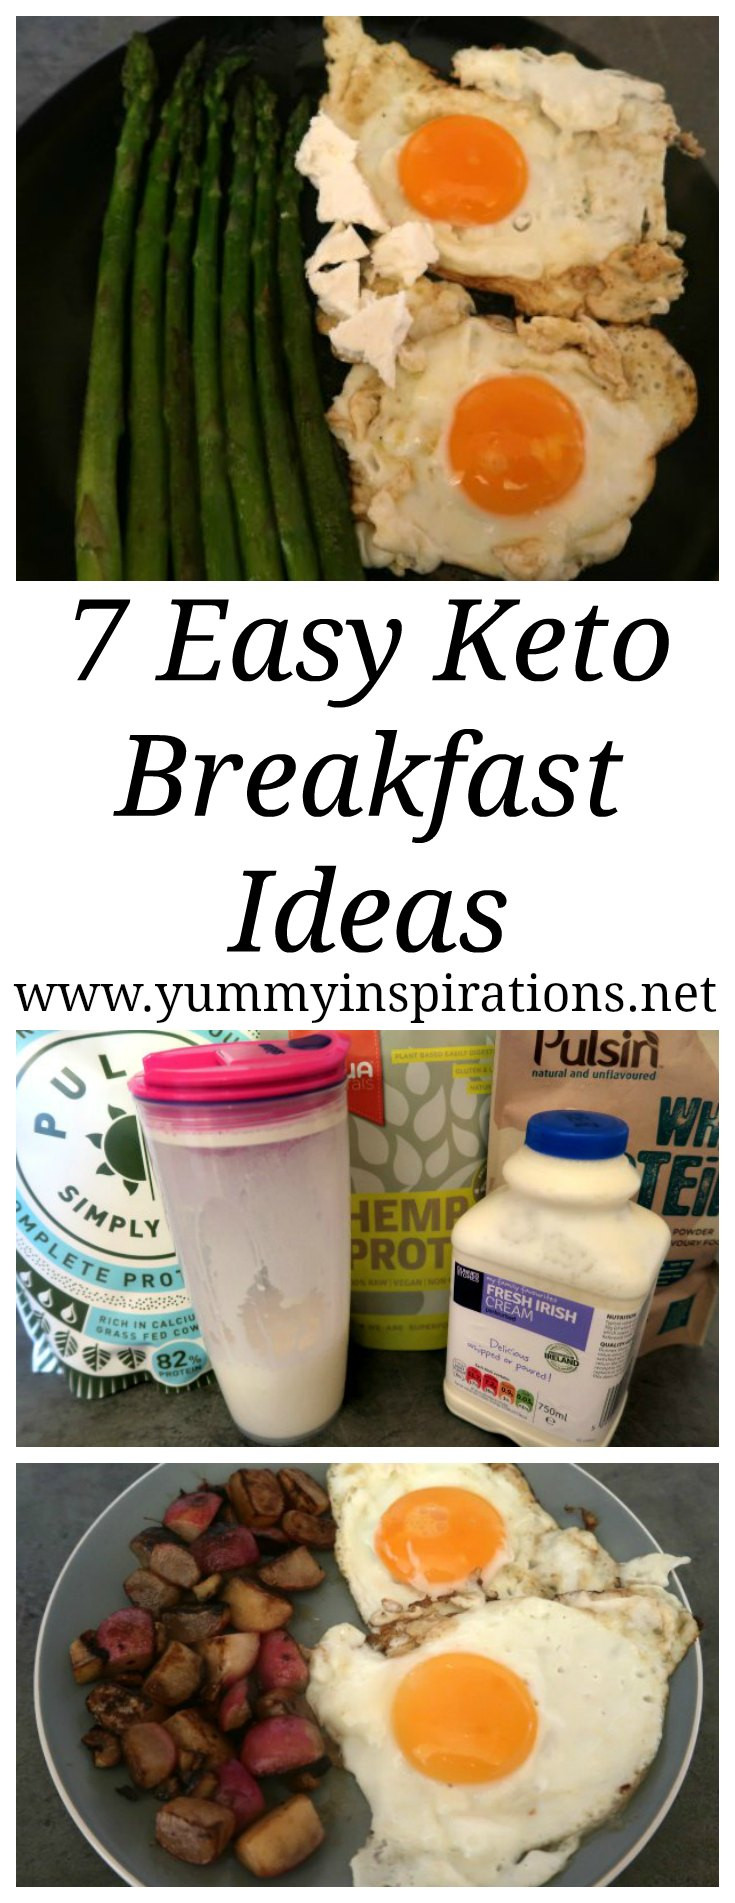 Keto Diet Recipes Breakfast Videos
 7 Easy Keto Breakfast Ideas Low Carb & Ketogenic Diet